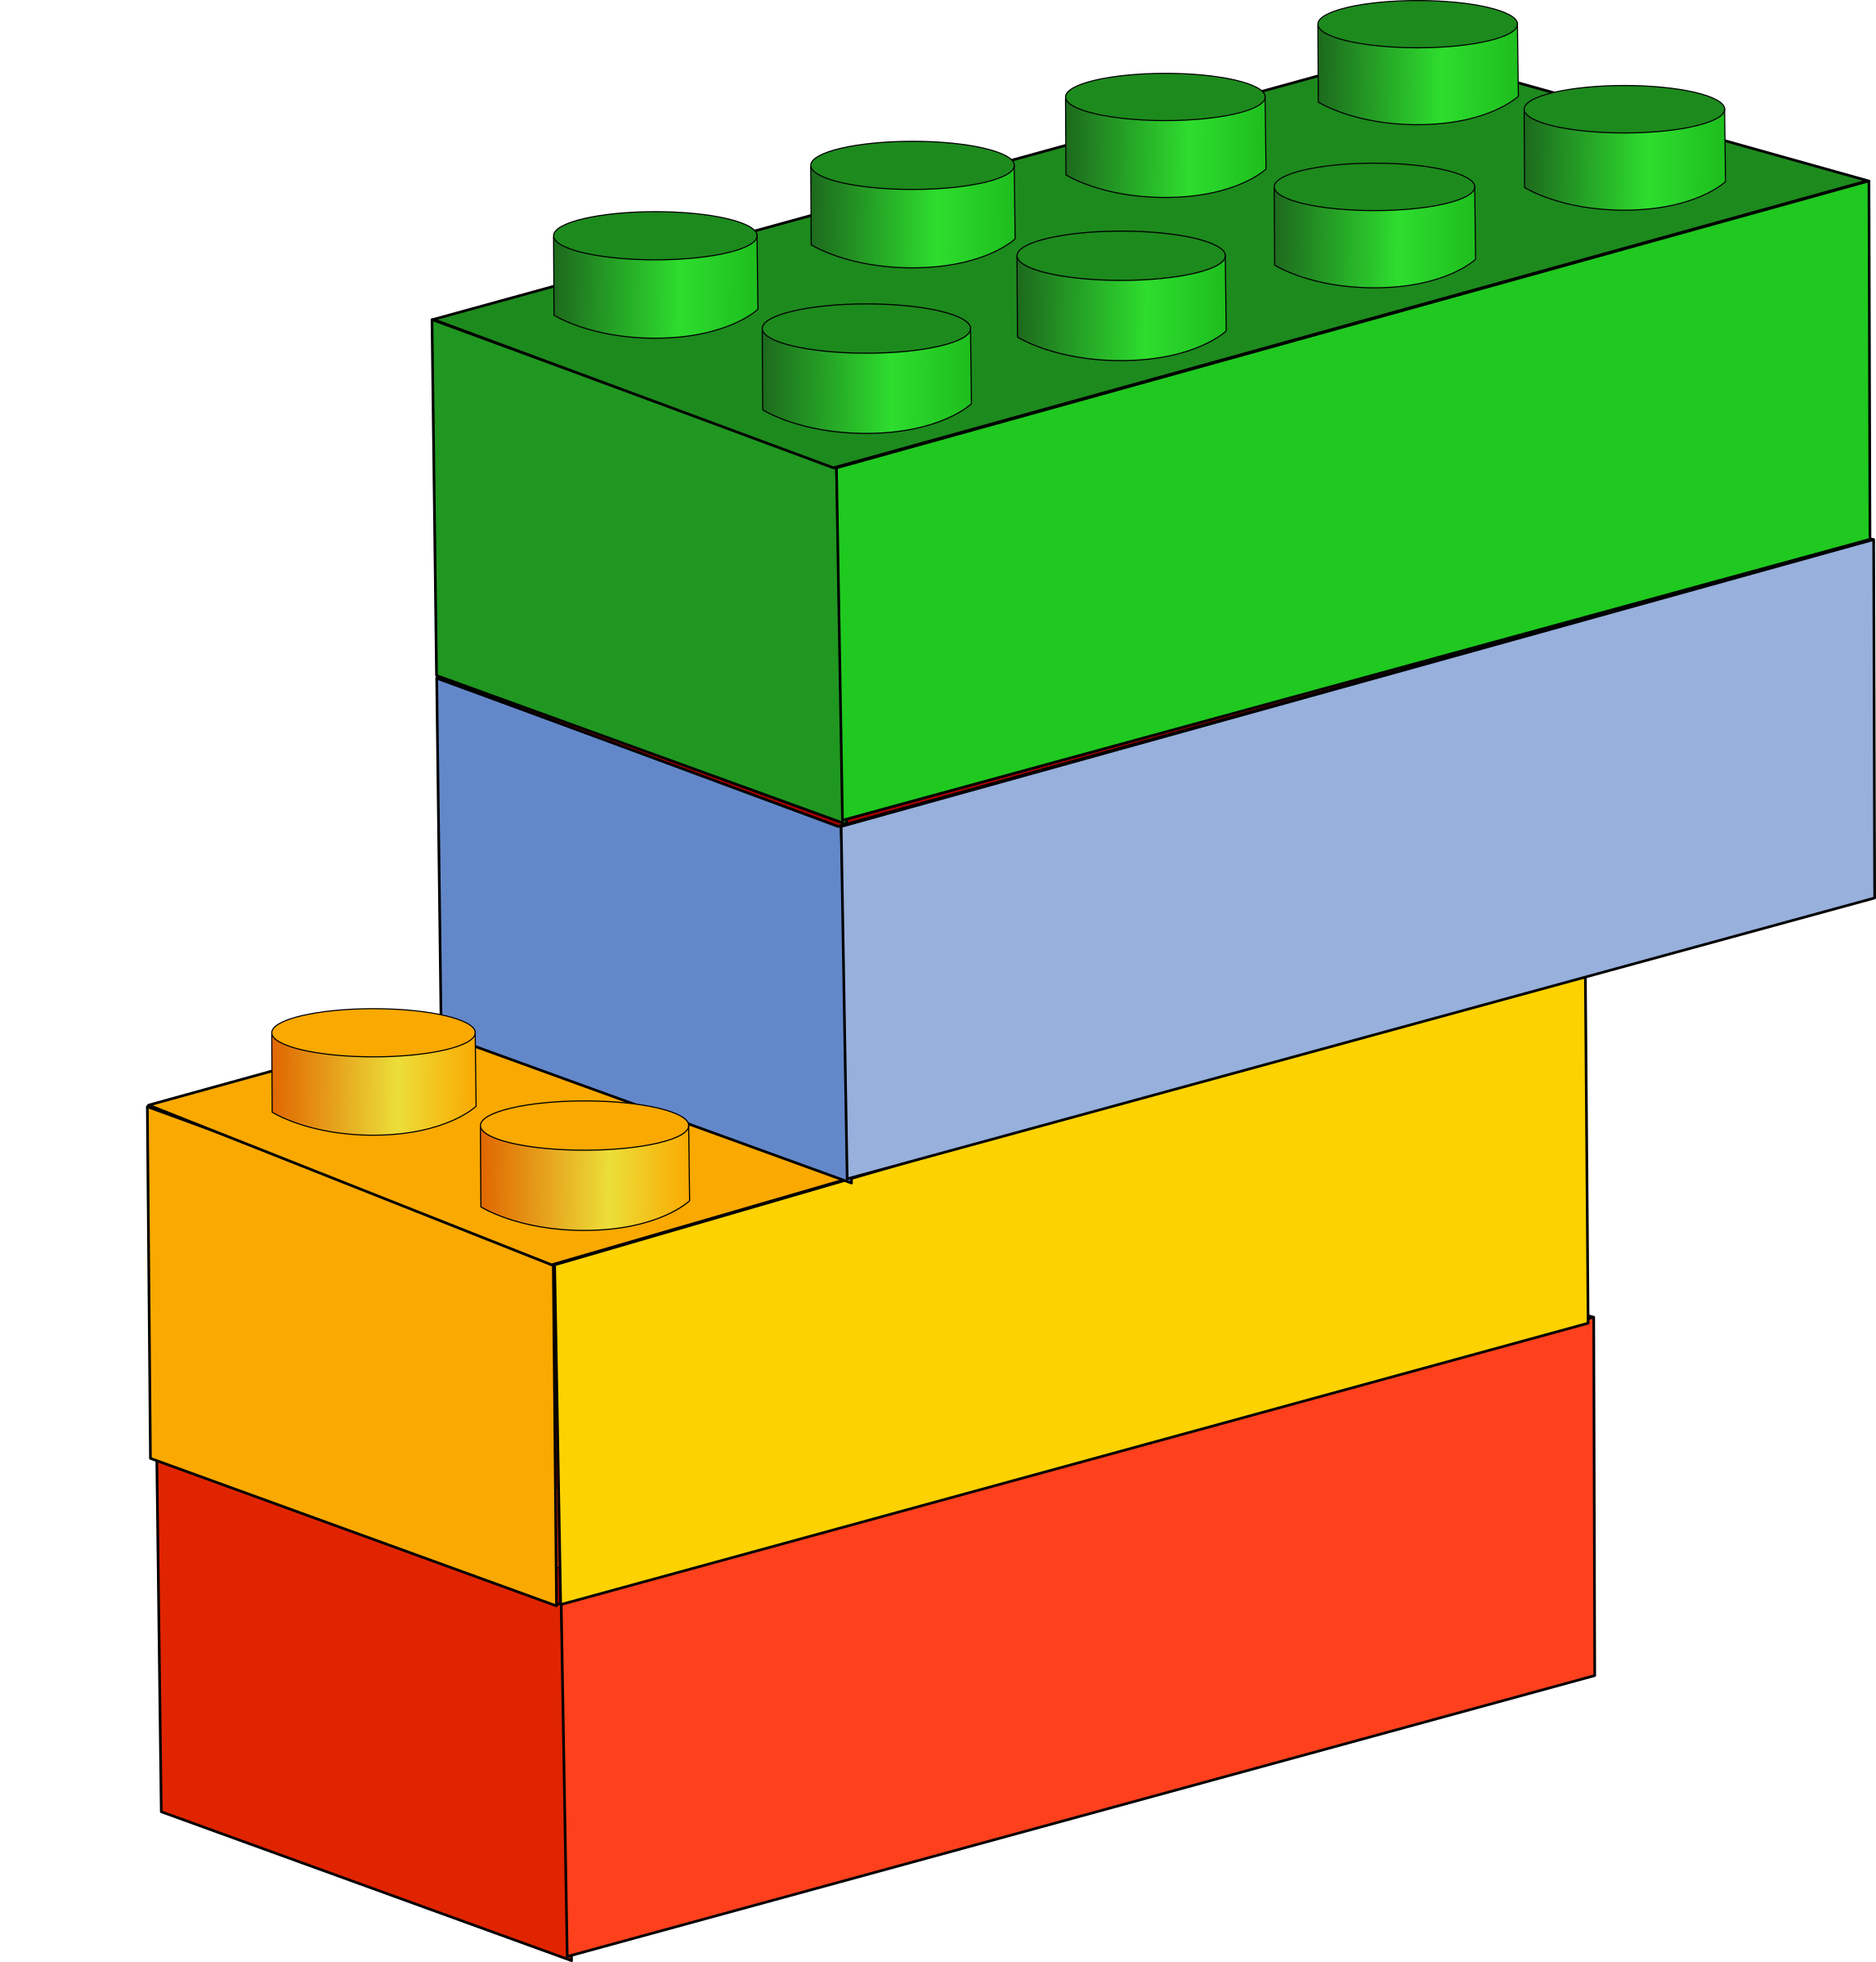 Lego Blocks Vector Clipart image Free stock photo Public Domain